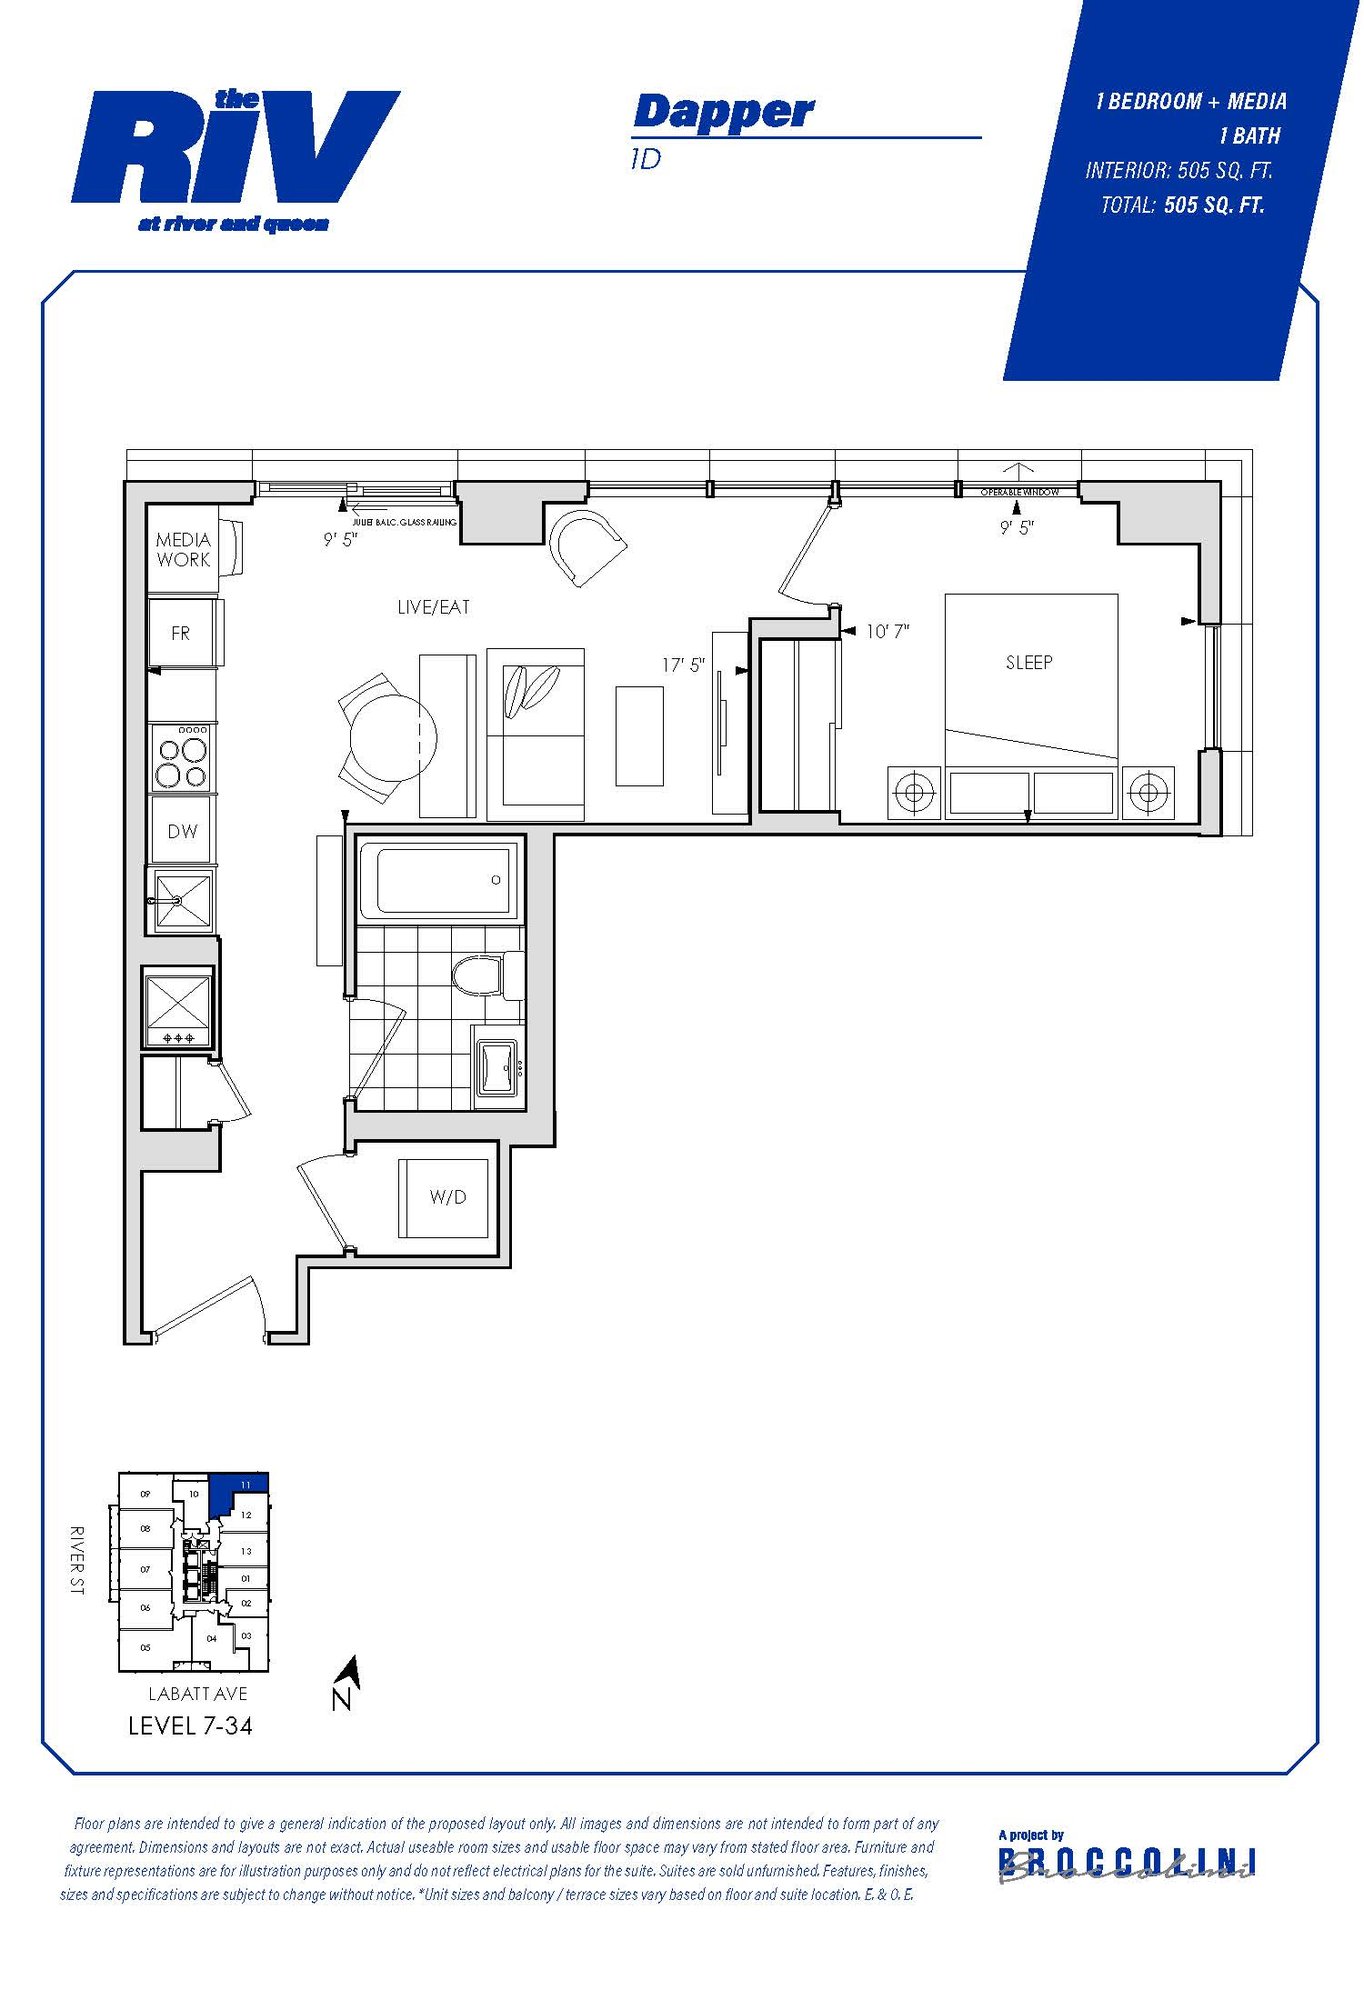 Floor plan for Dapper one bedroom unit in The Riv